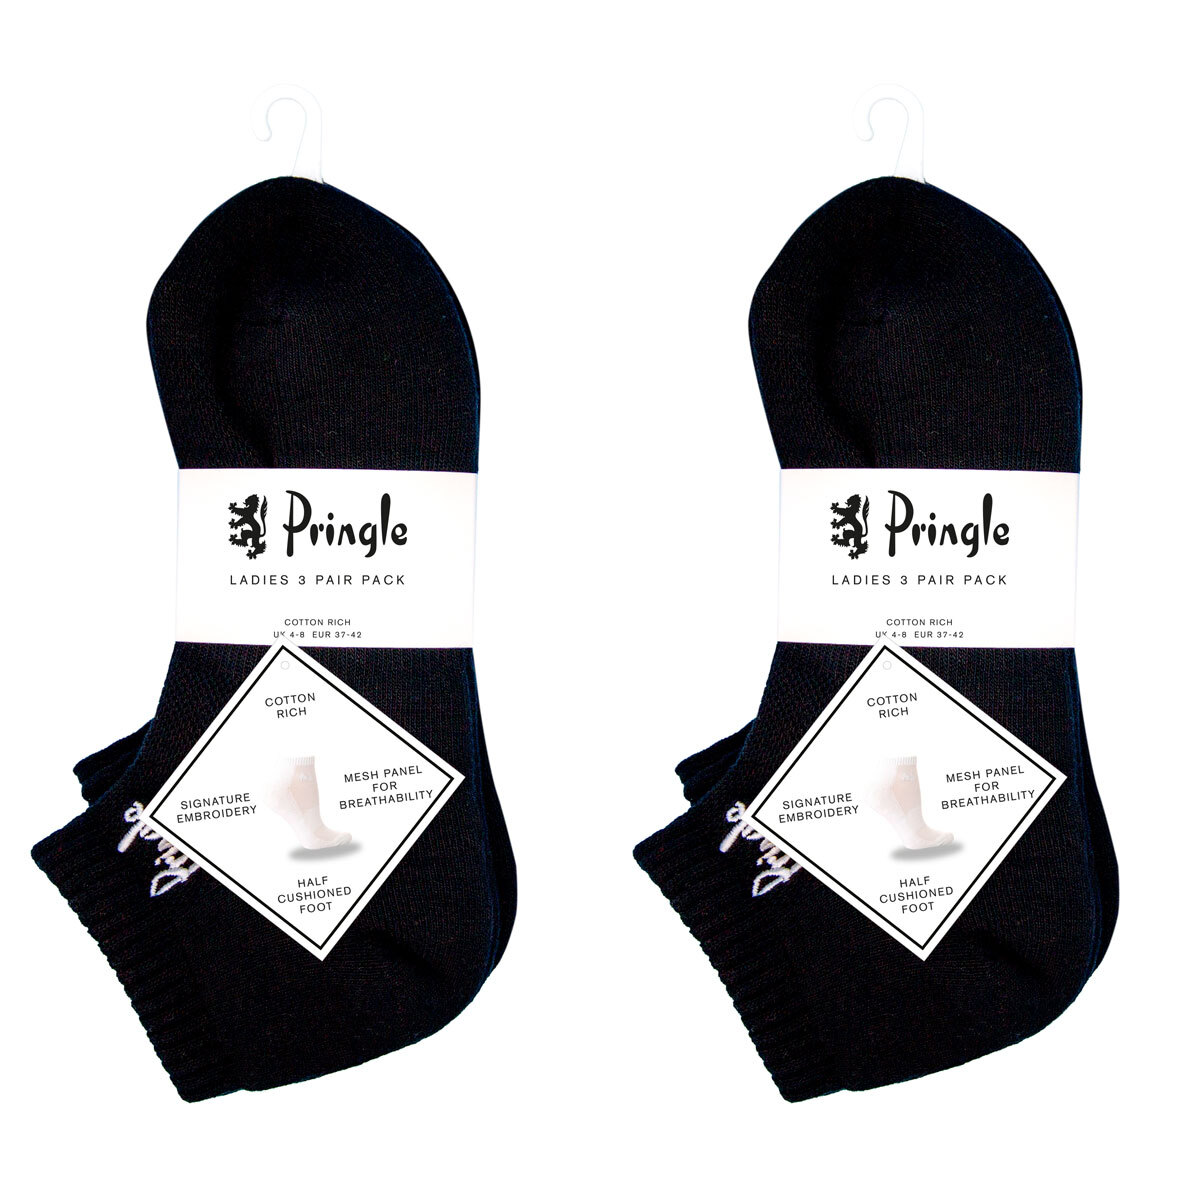 Pringle Women's 2 x 3 Pack Cushioned Sports Socks in Black, Size 4-8